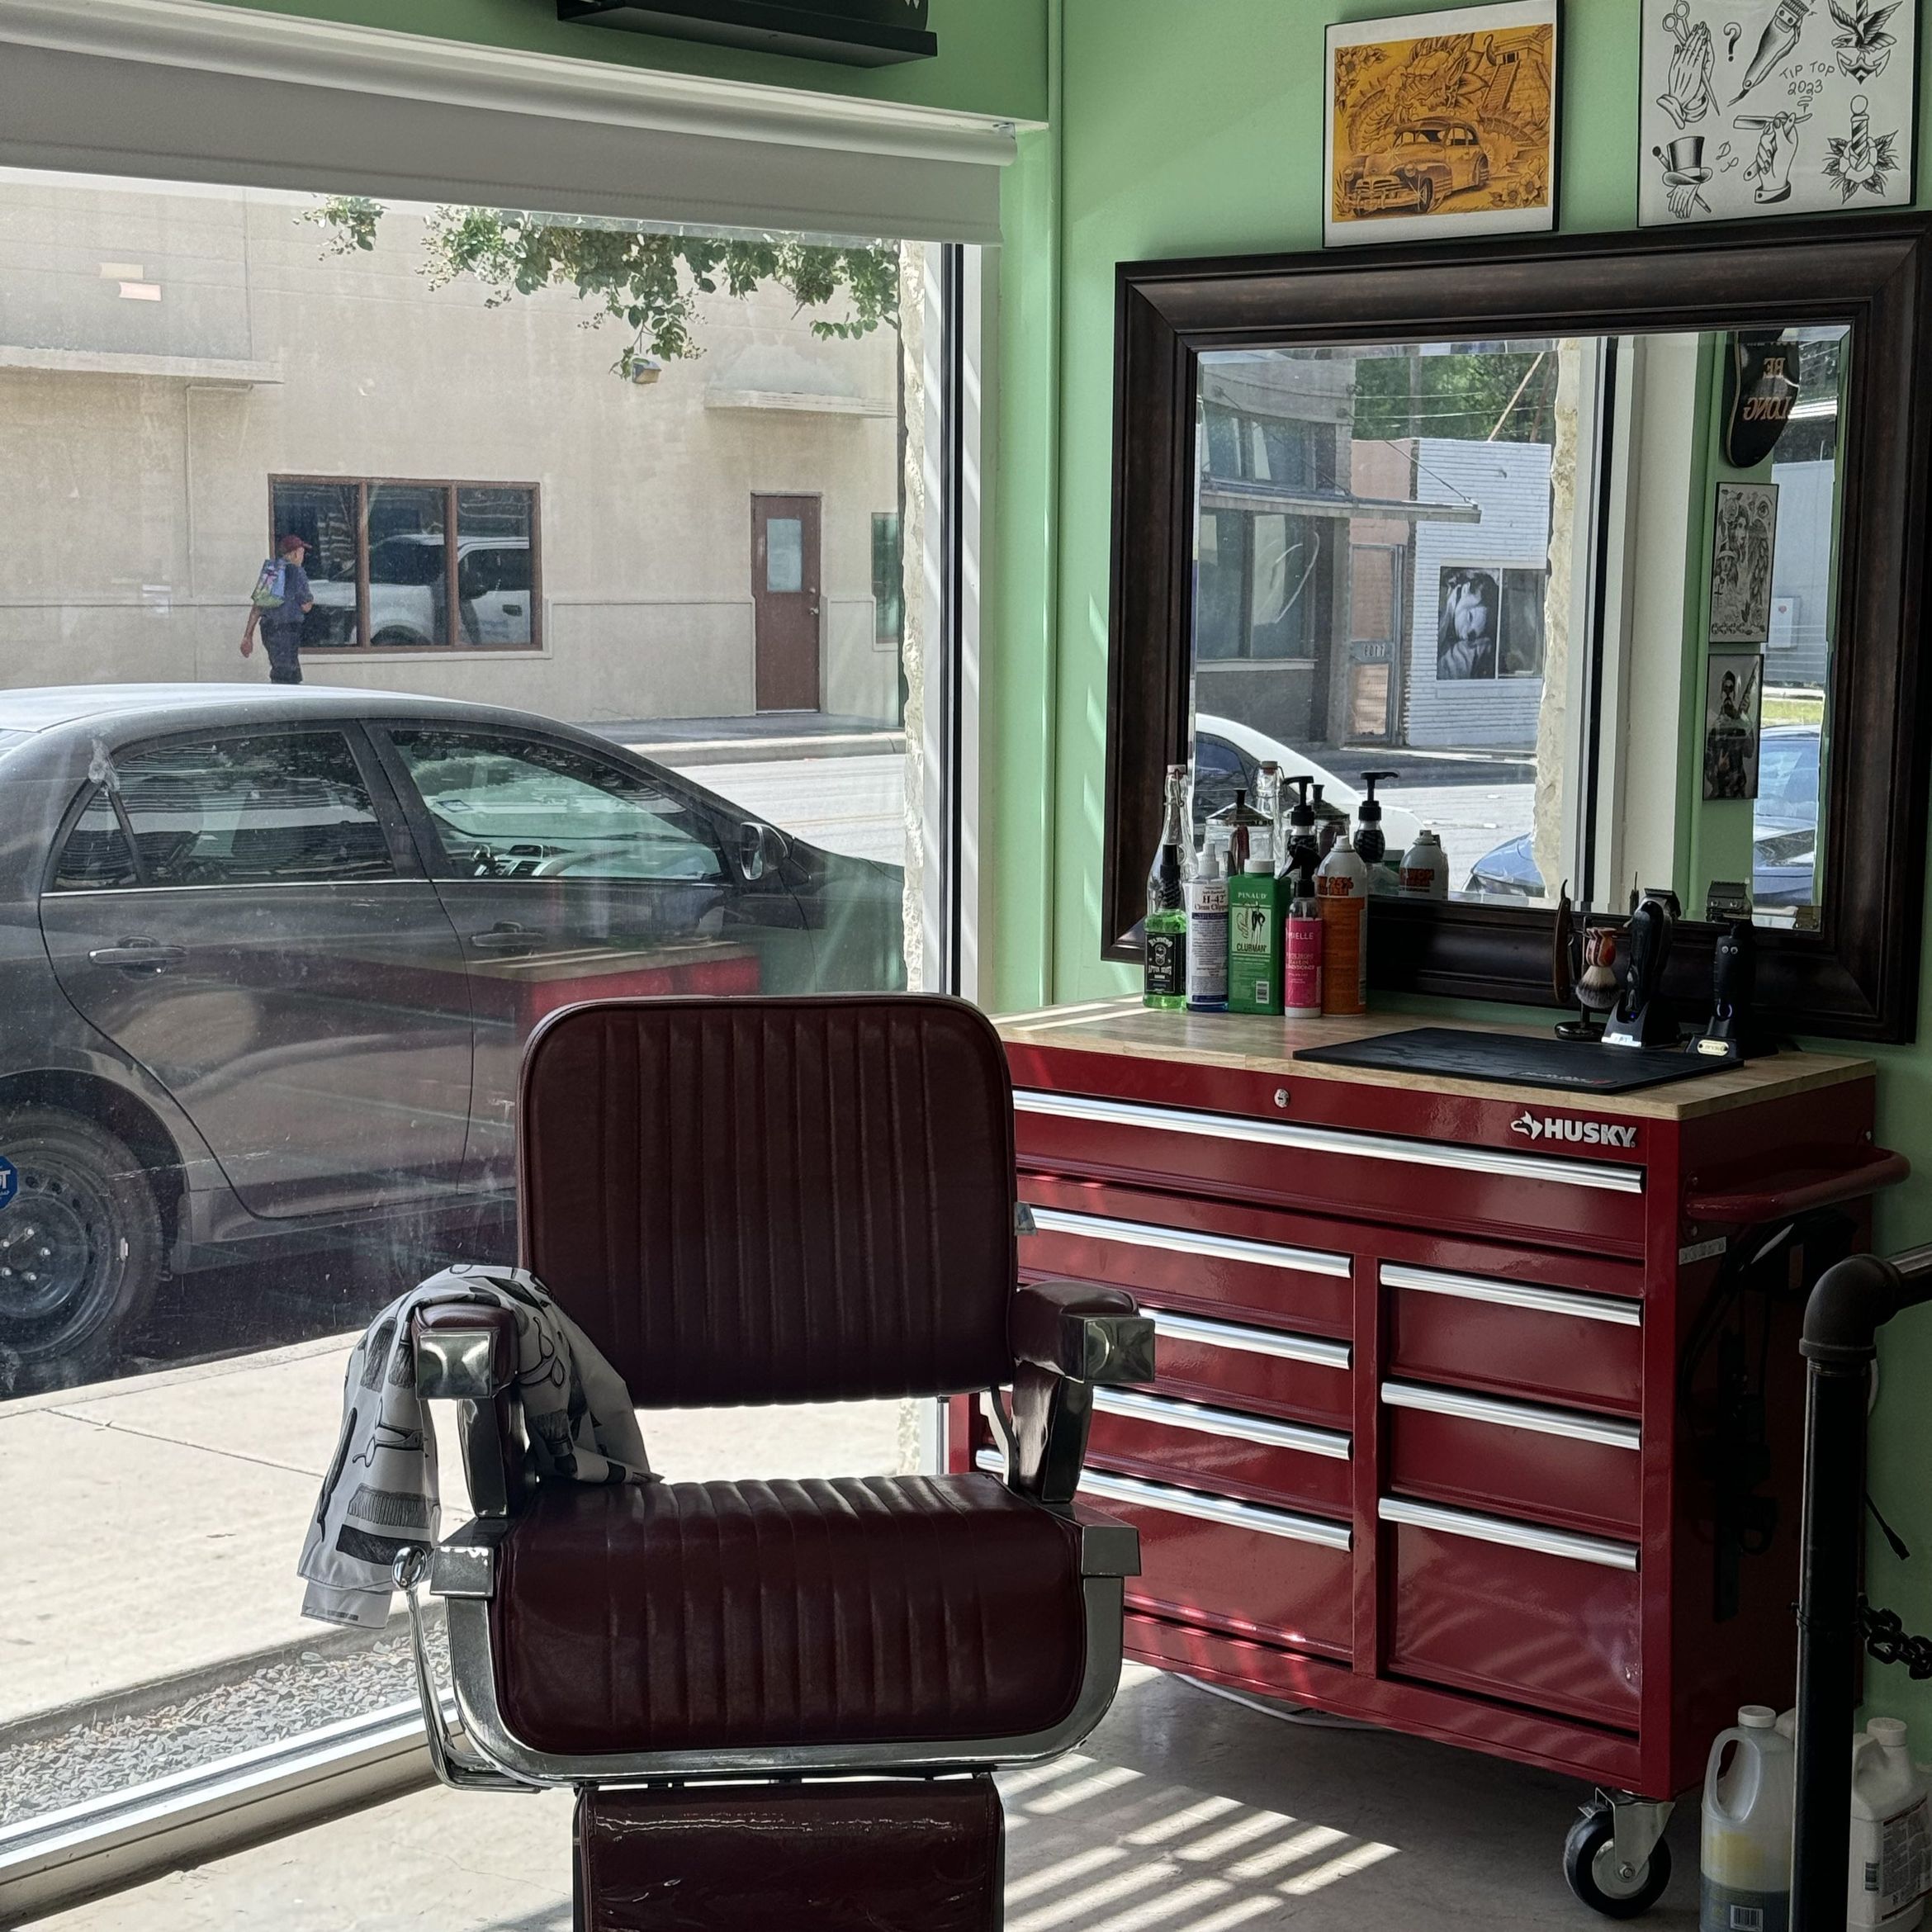 Erock the barber, 1010 S Flores St, San Antonio, 78204